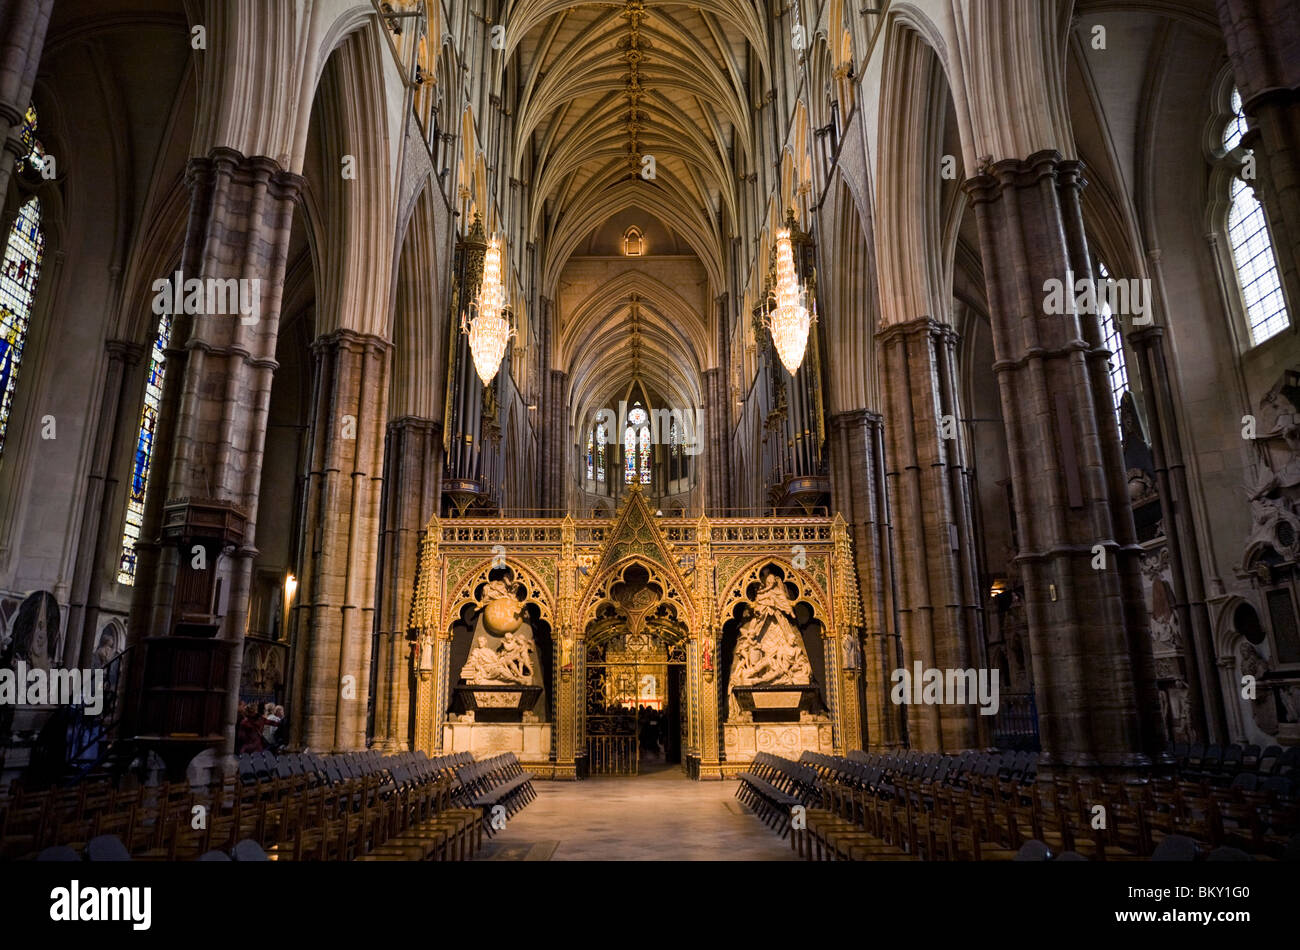 Nave. La Westminster Abbey Iglesia. Coro biombo y Quire Choir screen. England GB Great Britain UK: en el Reino Unido. Stock Photo